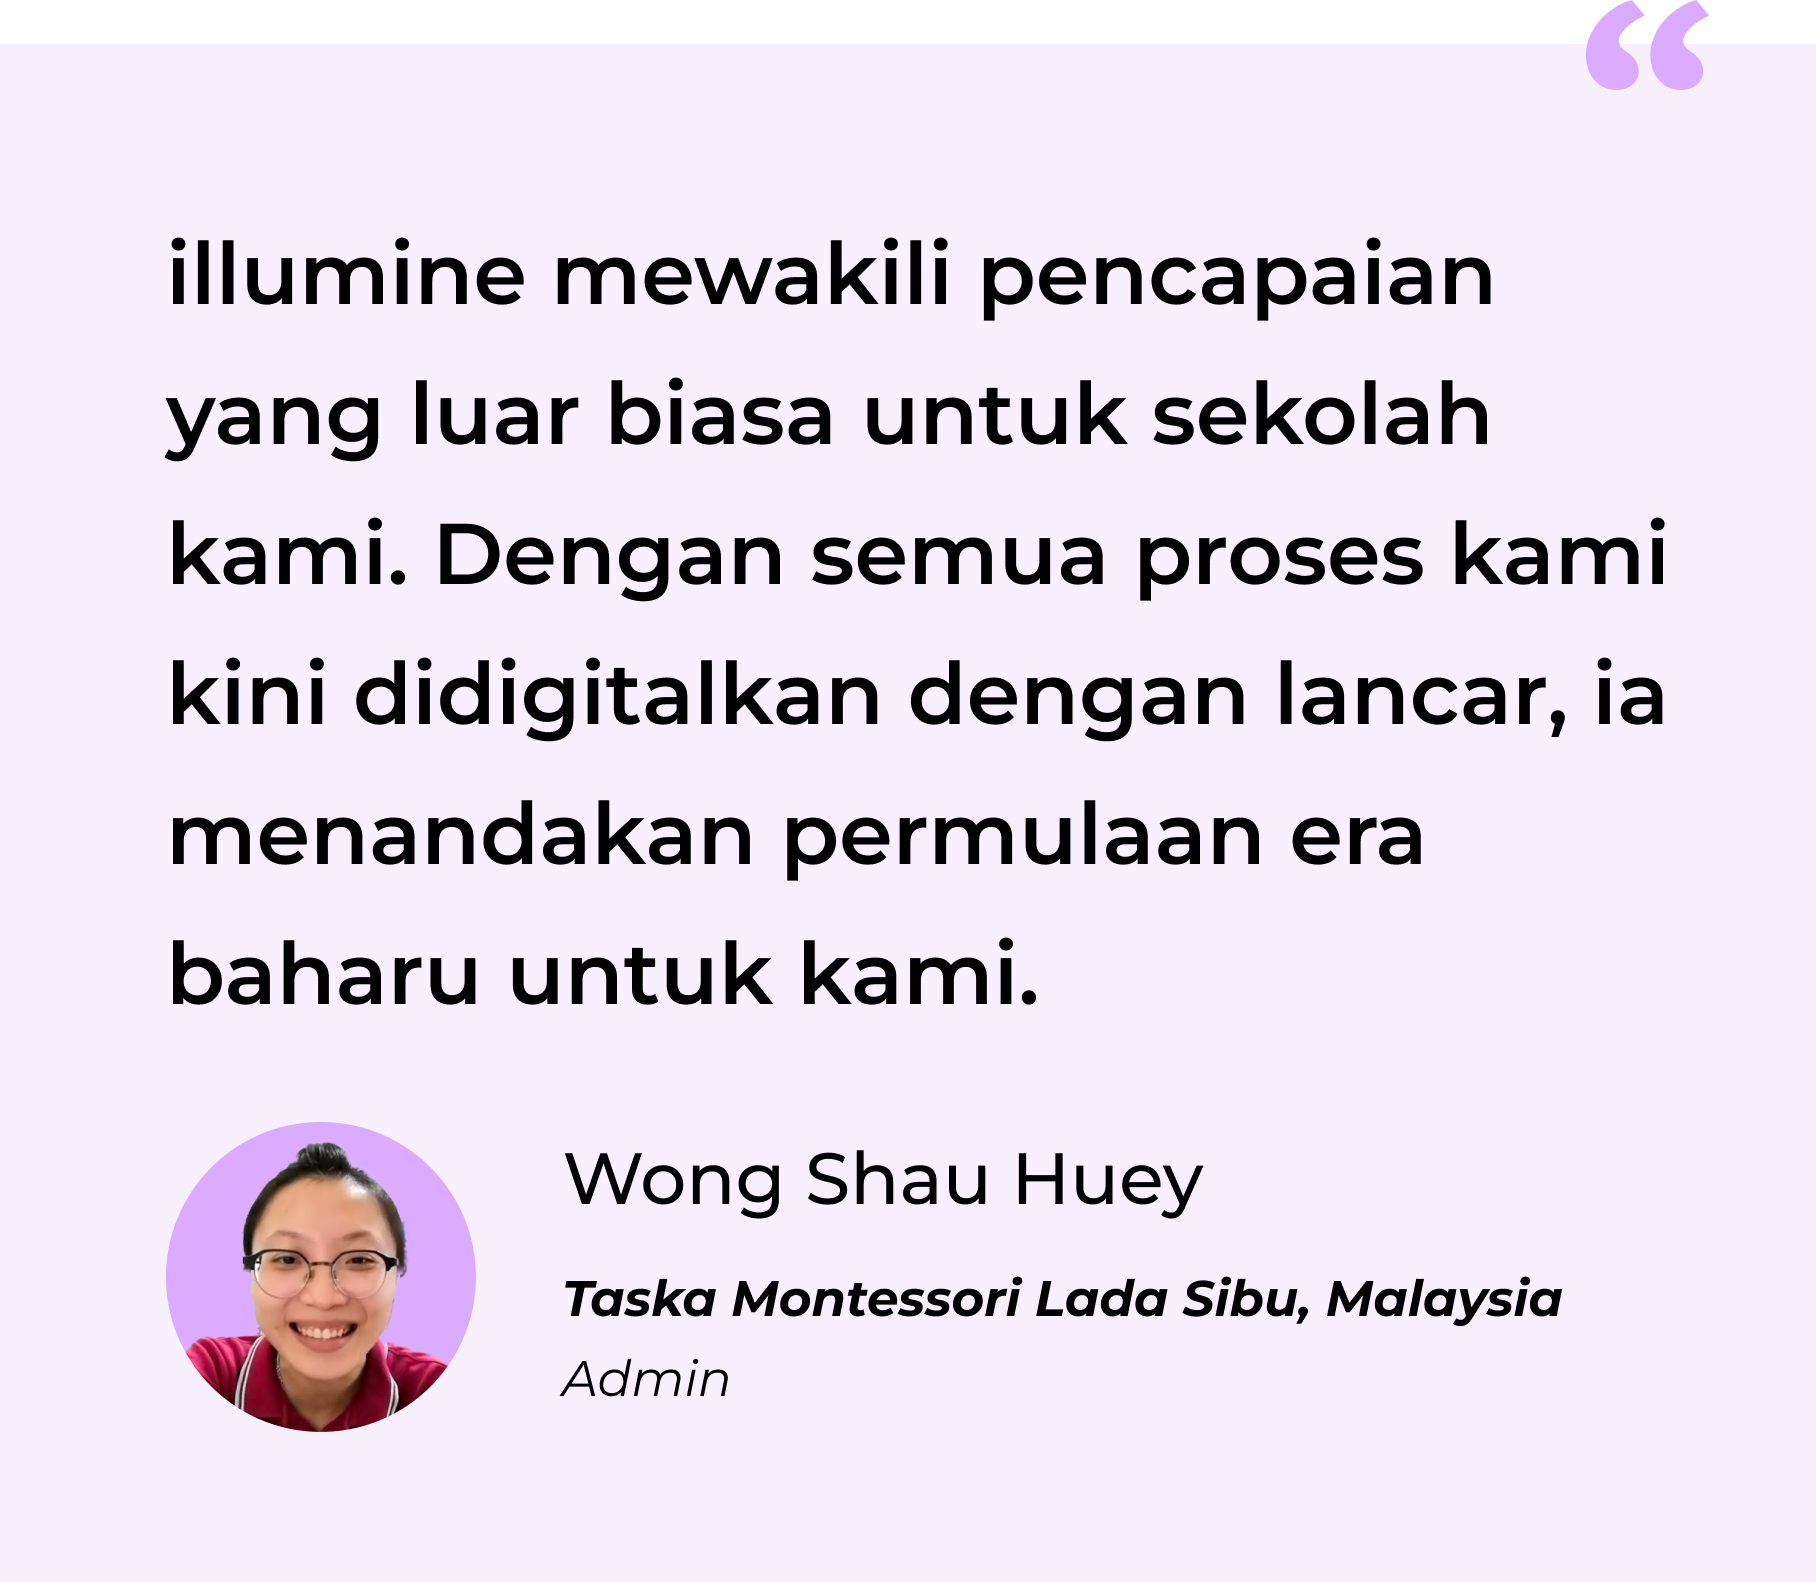 Malay_TaskaLada_Testimonial